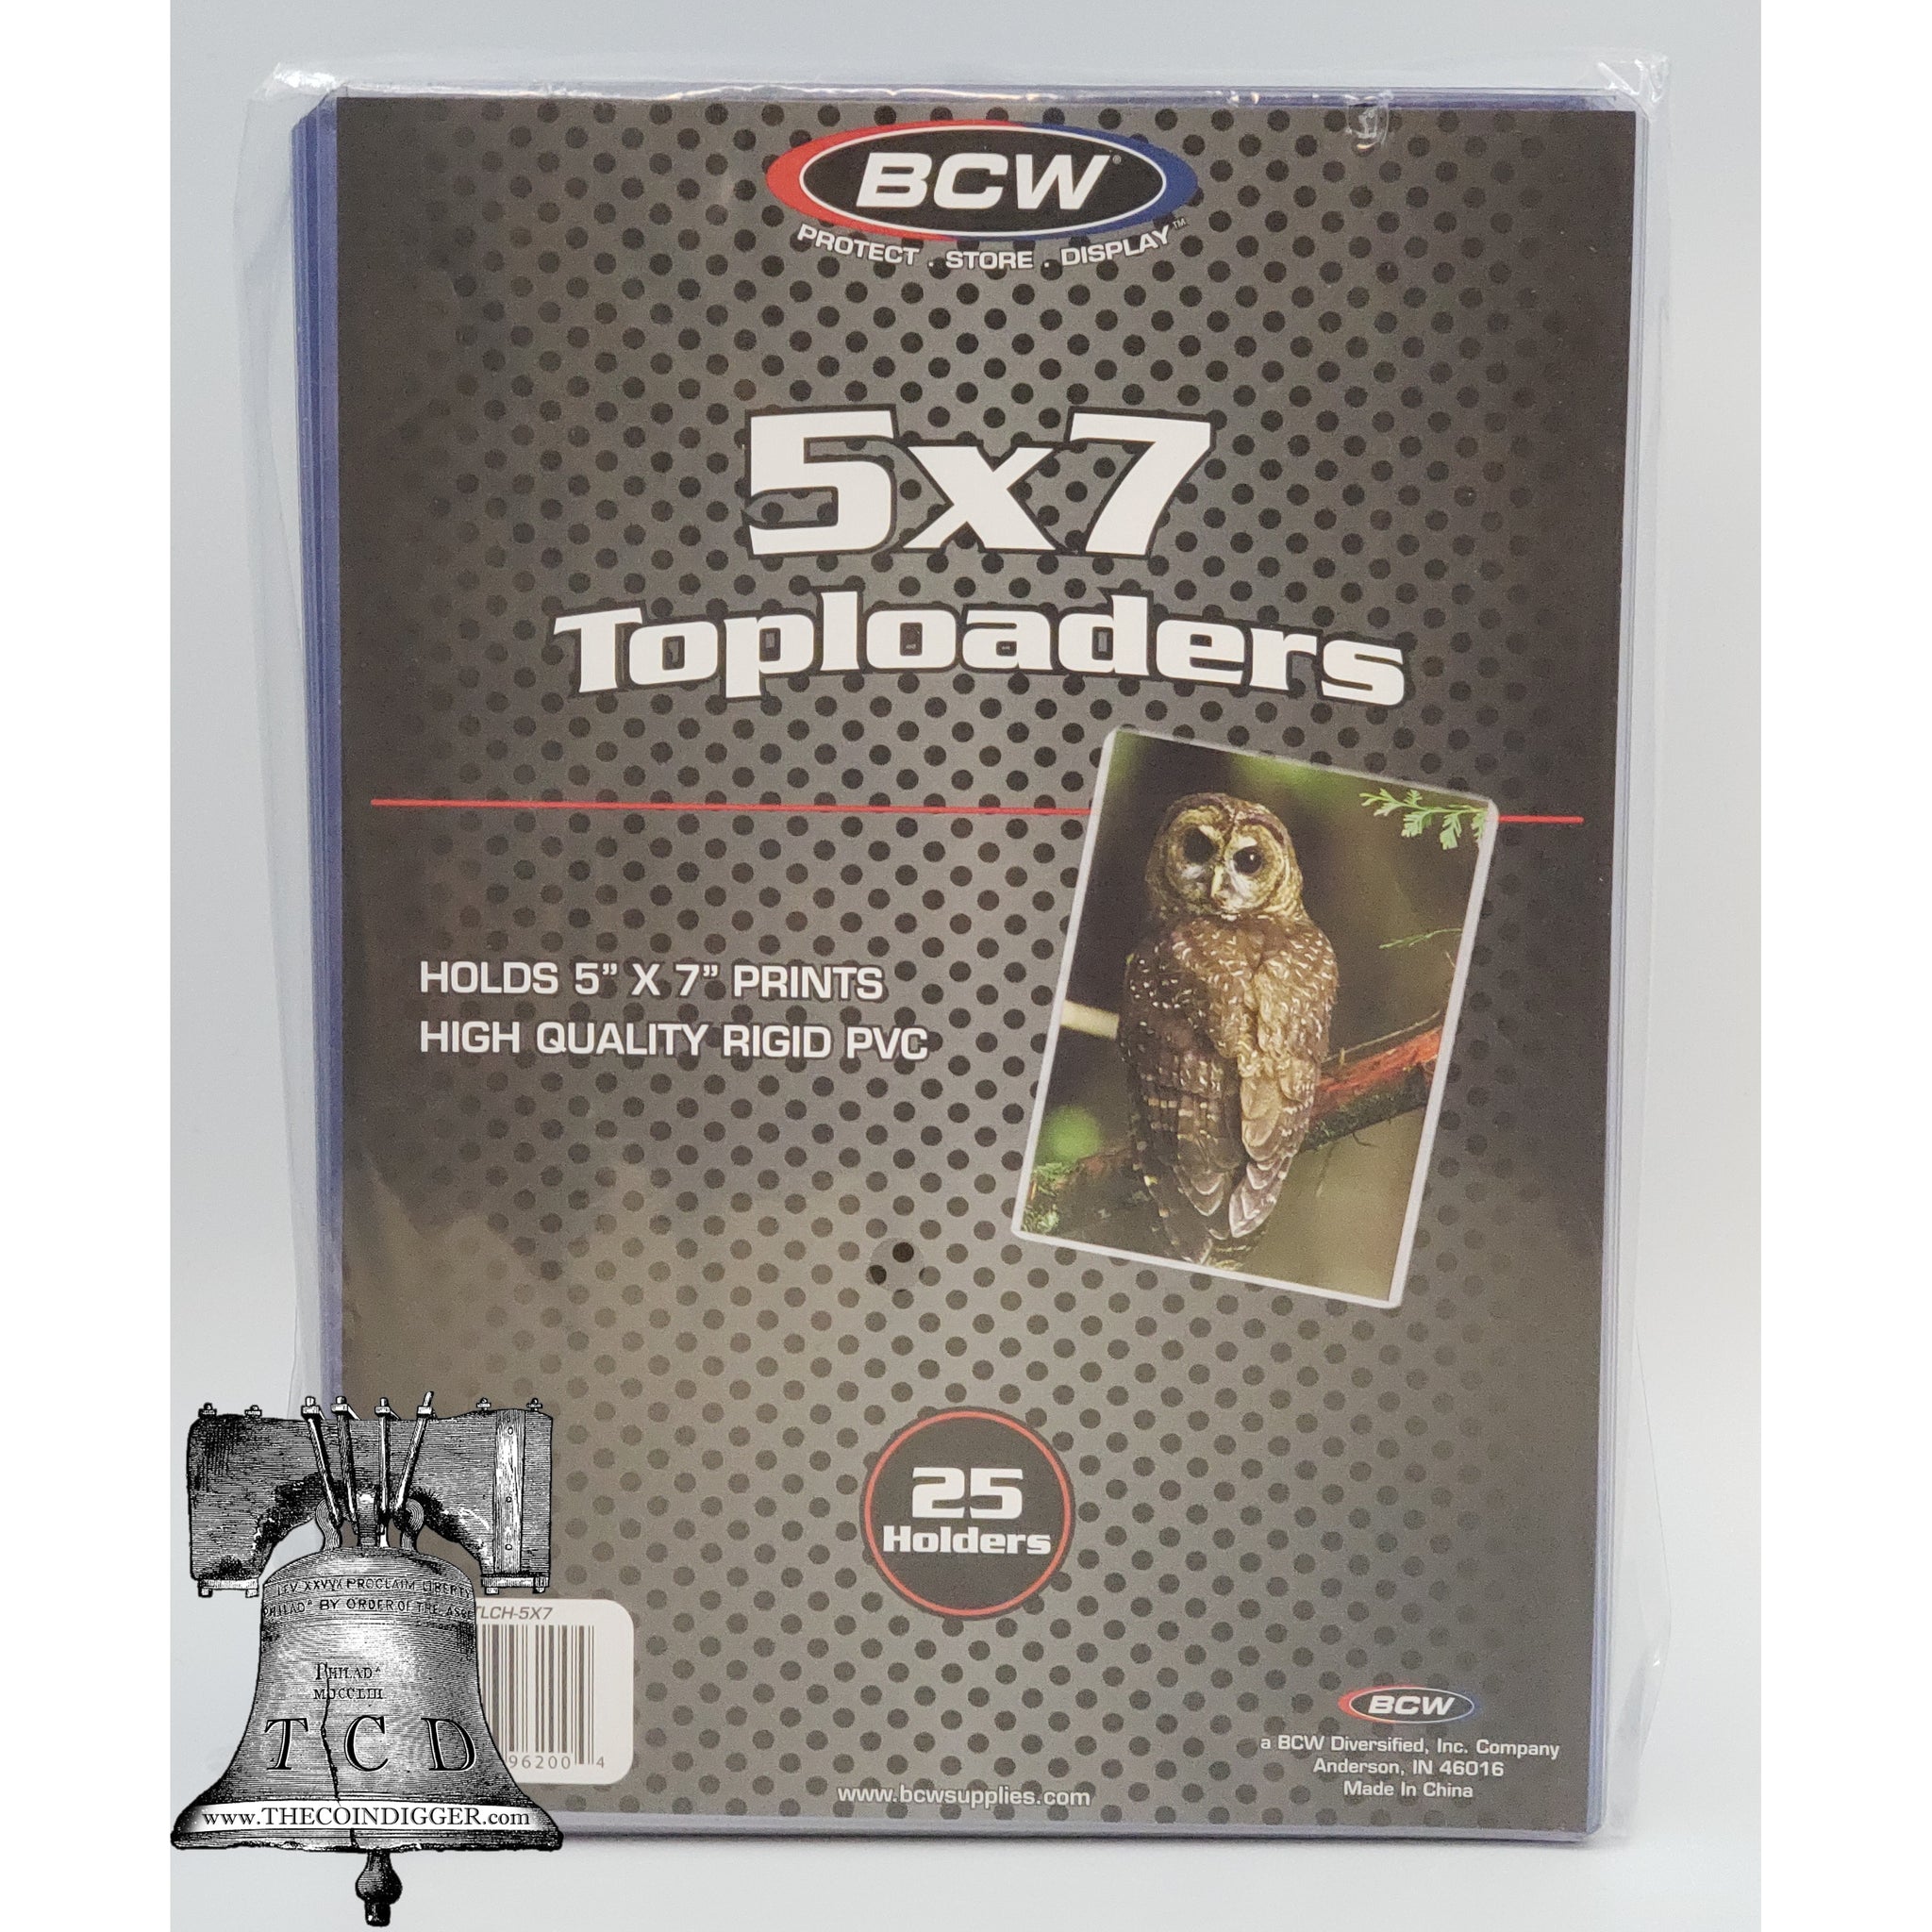 BCW (10) 5x7 Photo Topload Holders - Rigid Plastic Sleeves Brand